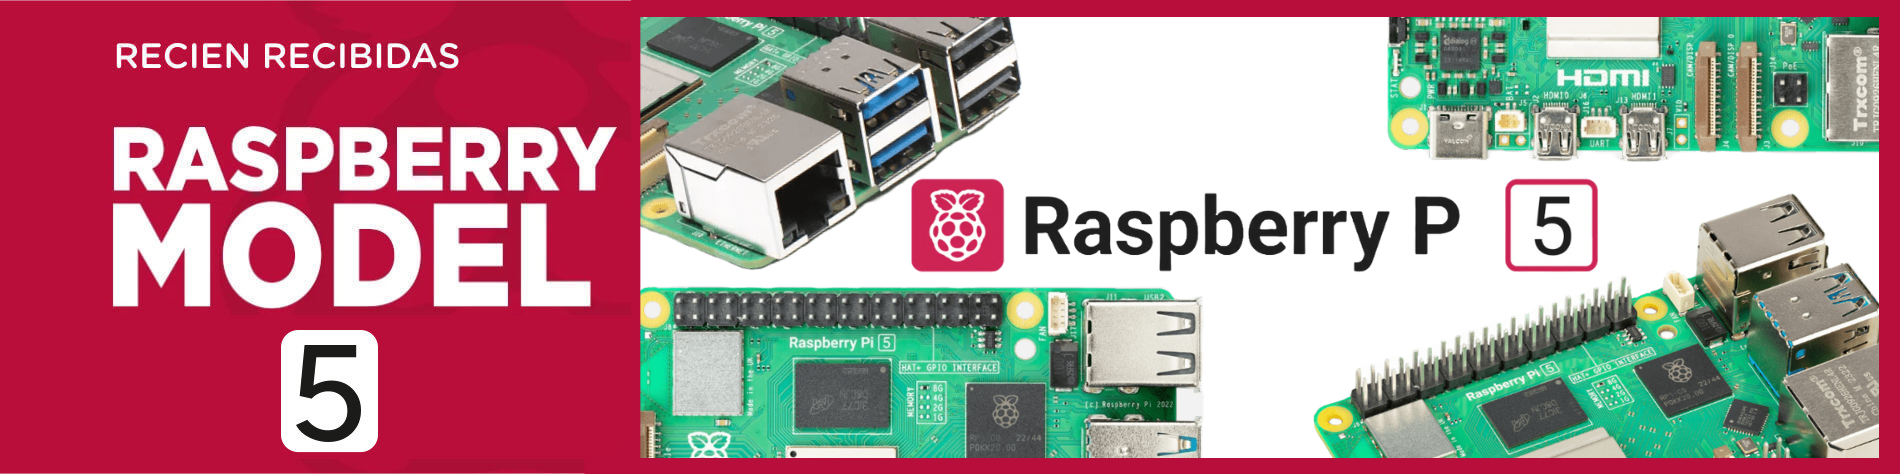 Nuevas Raspberry PI 5 - Made in UK